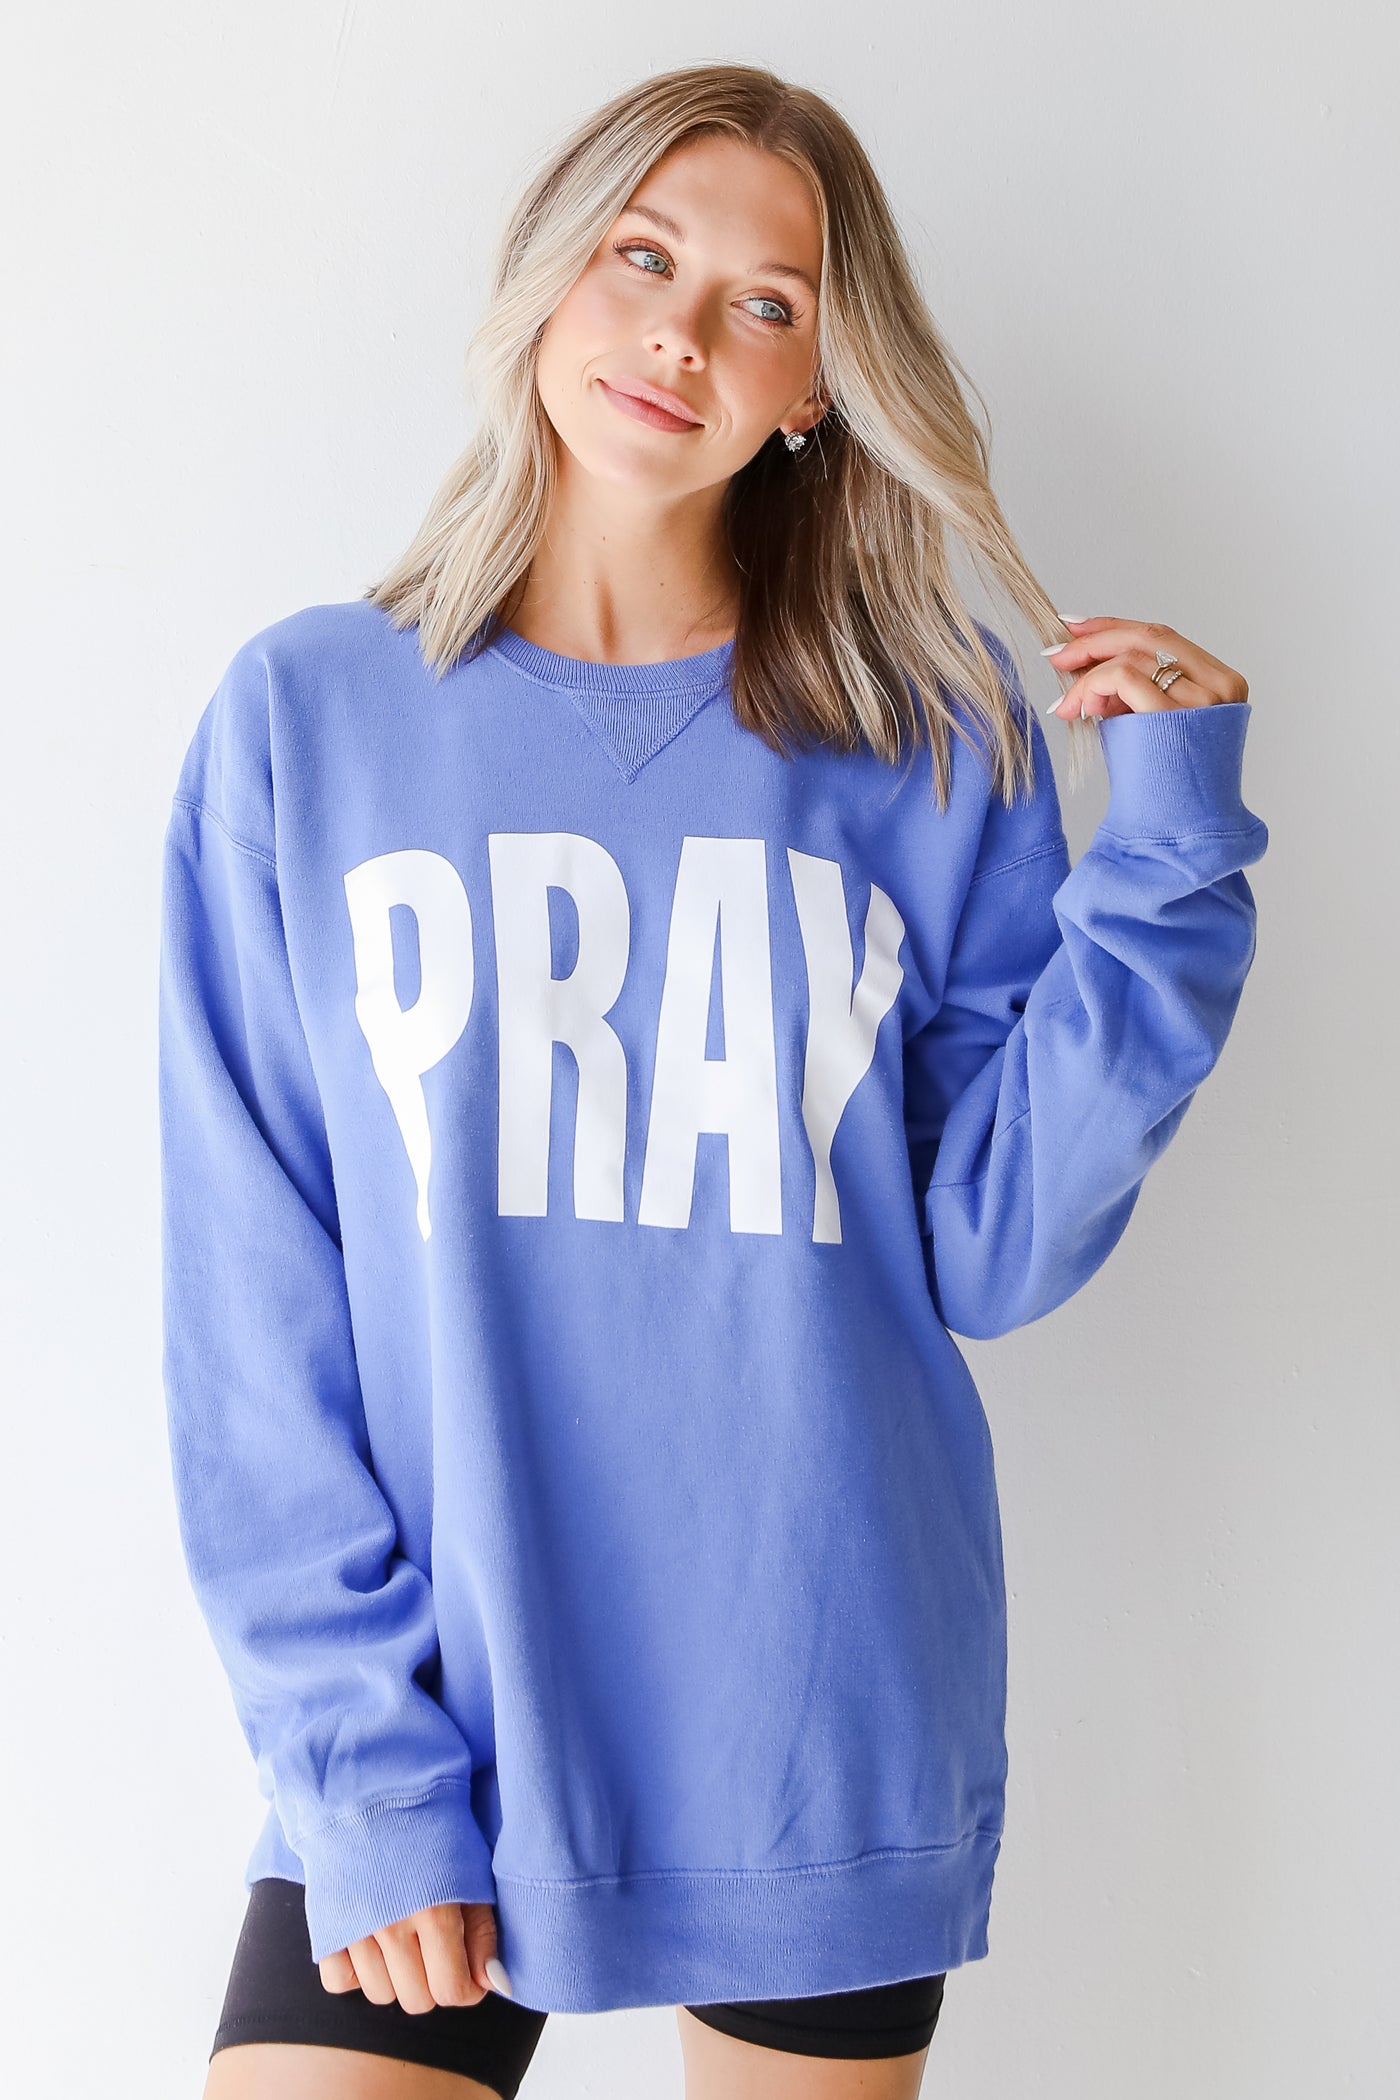 Purple Pray Pullover. Graphic Sweatshirt. Christian Graphic Trendy Sweatshirt Oversized